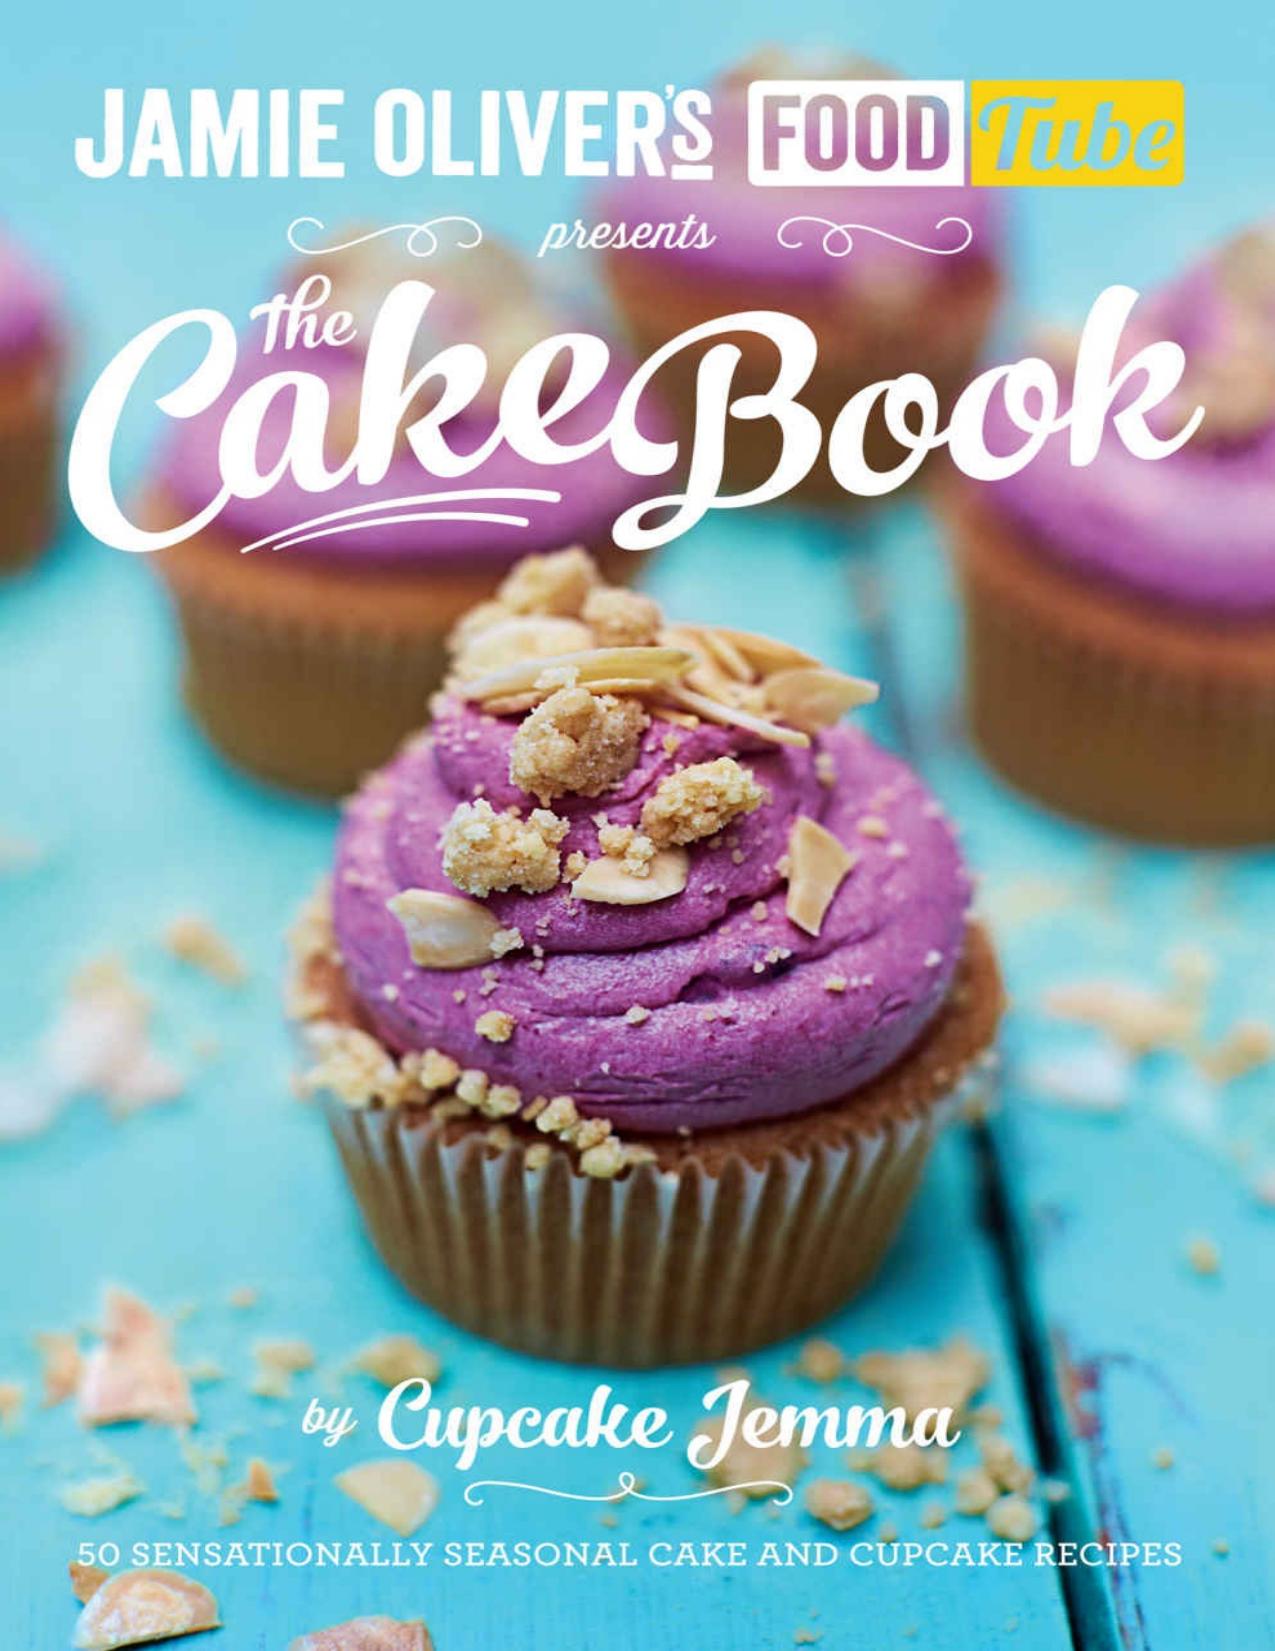 Jamie's Food Tube: The Cake Book (Jamie Olivers Food Tube) by Cupcake Jemma